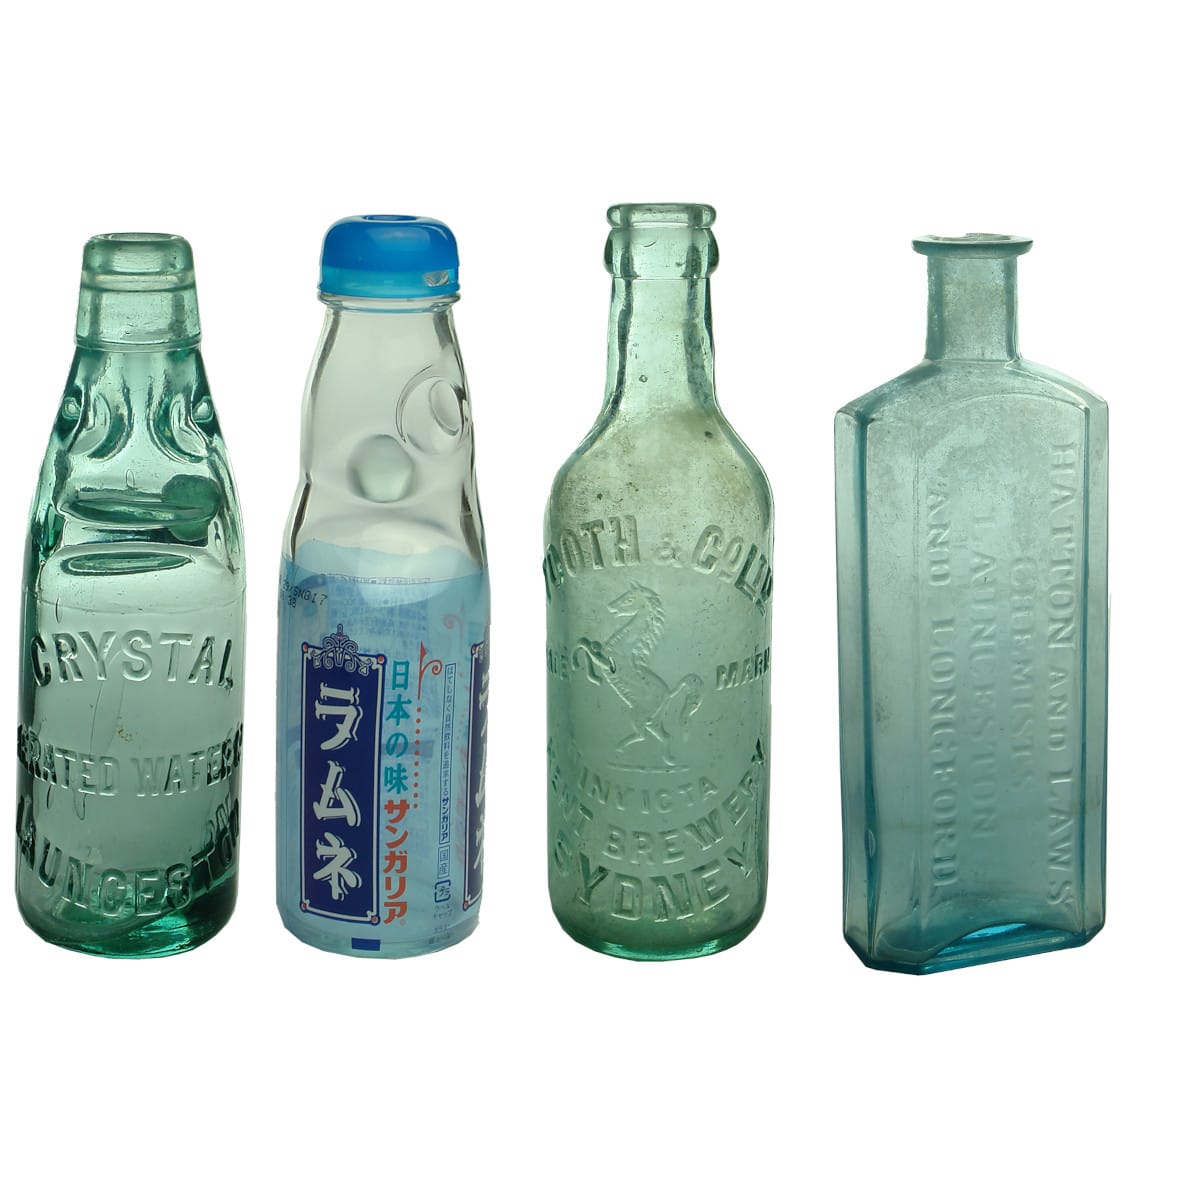 Four Bottles: Crystal Aerated Water, Launceston 6 oz Codd; Modern Japanese Codd; Tooth & Co, Sydney 6 oz Crown Seal; Hatton & Laws, Launceston & Longford Chemist.